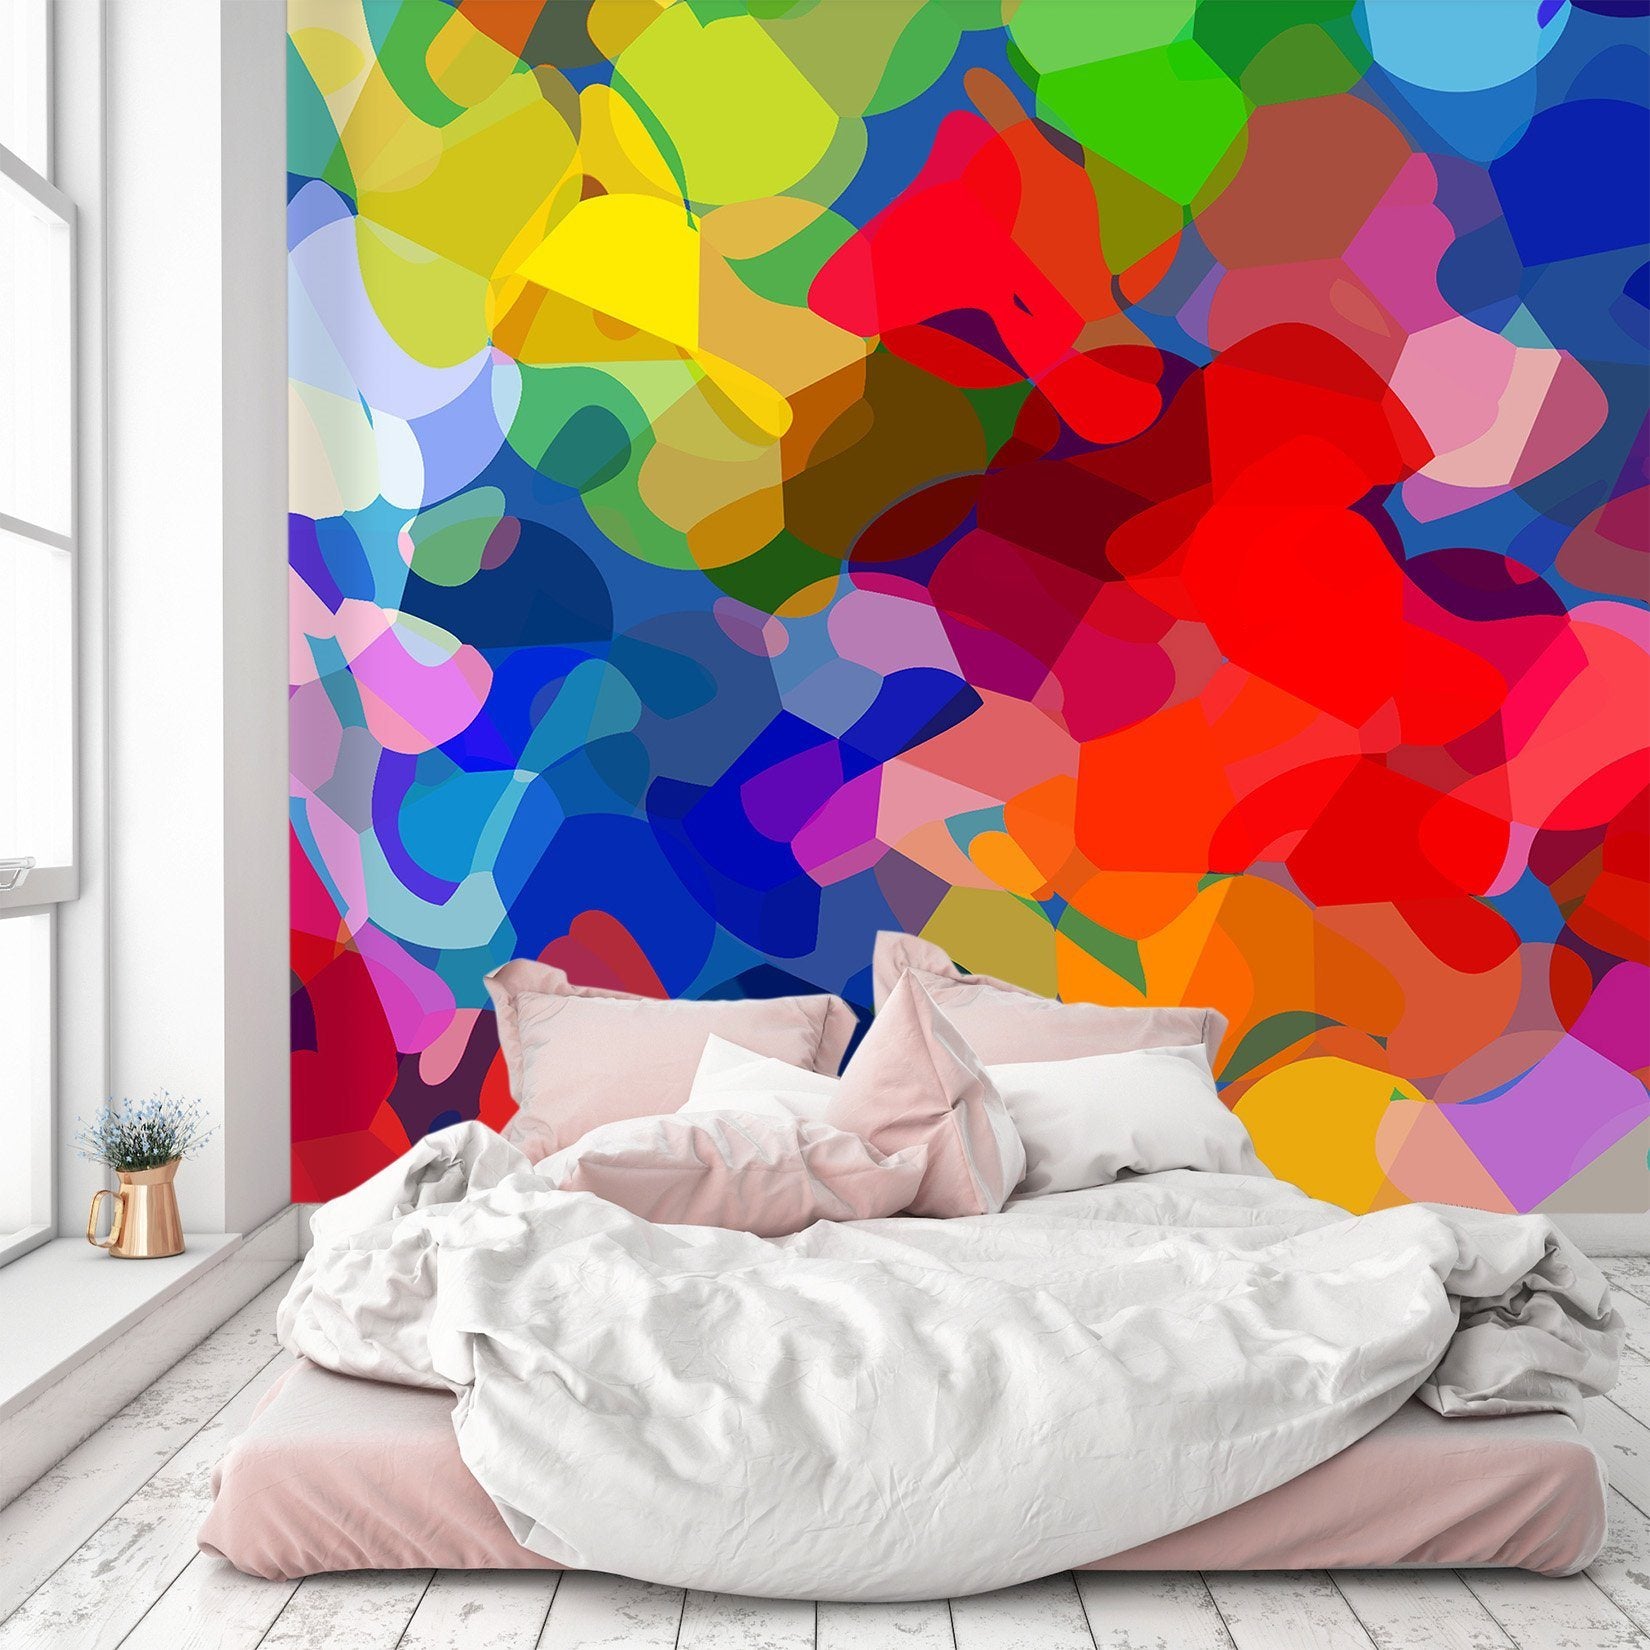 3D Bright Colors 1006 Shandra Smith Wall Mural Wall Murals Wallpaper AJ Wallpaper 2 